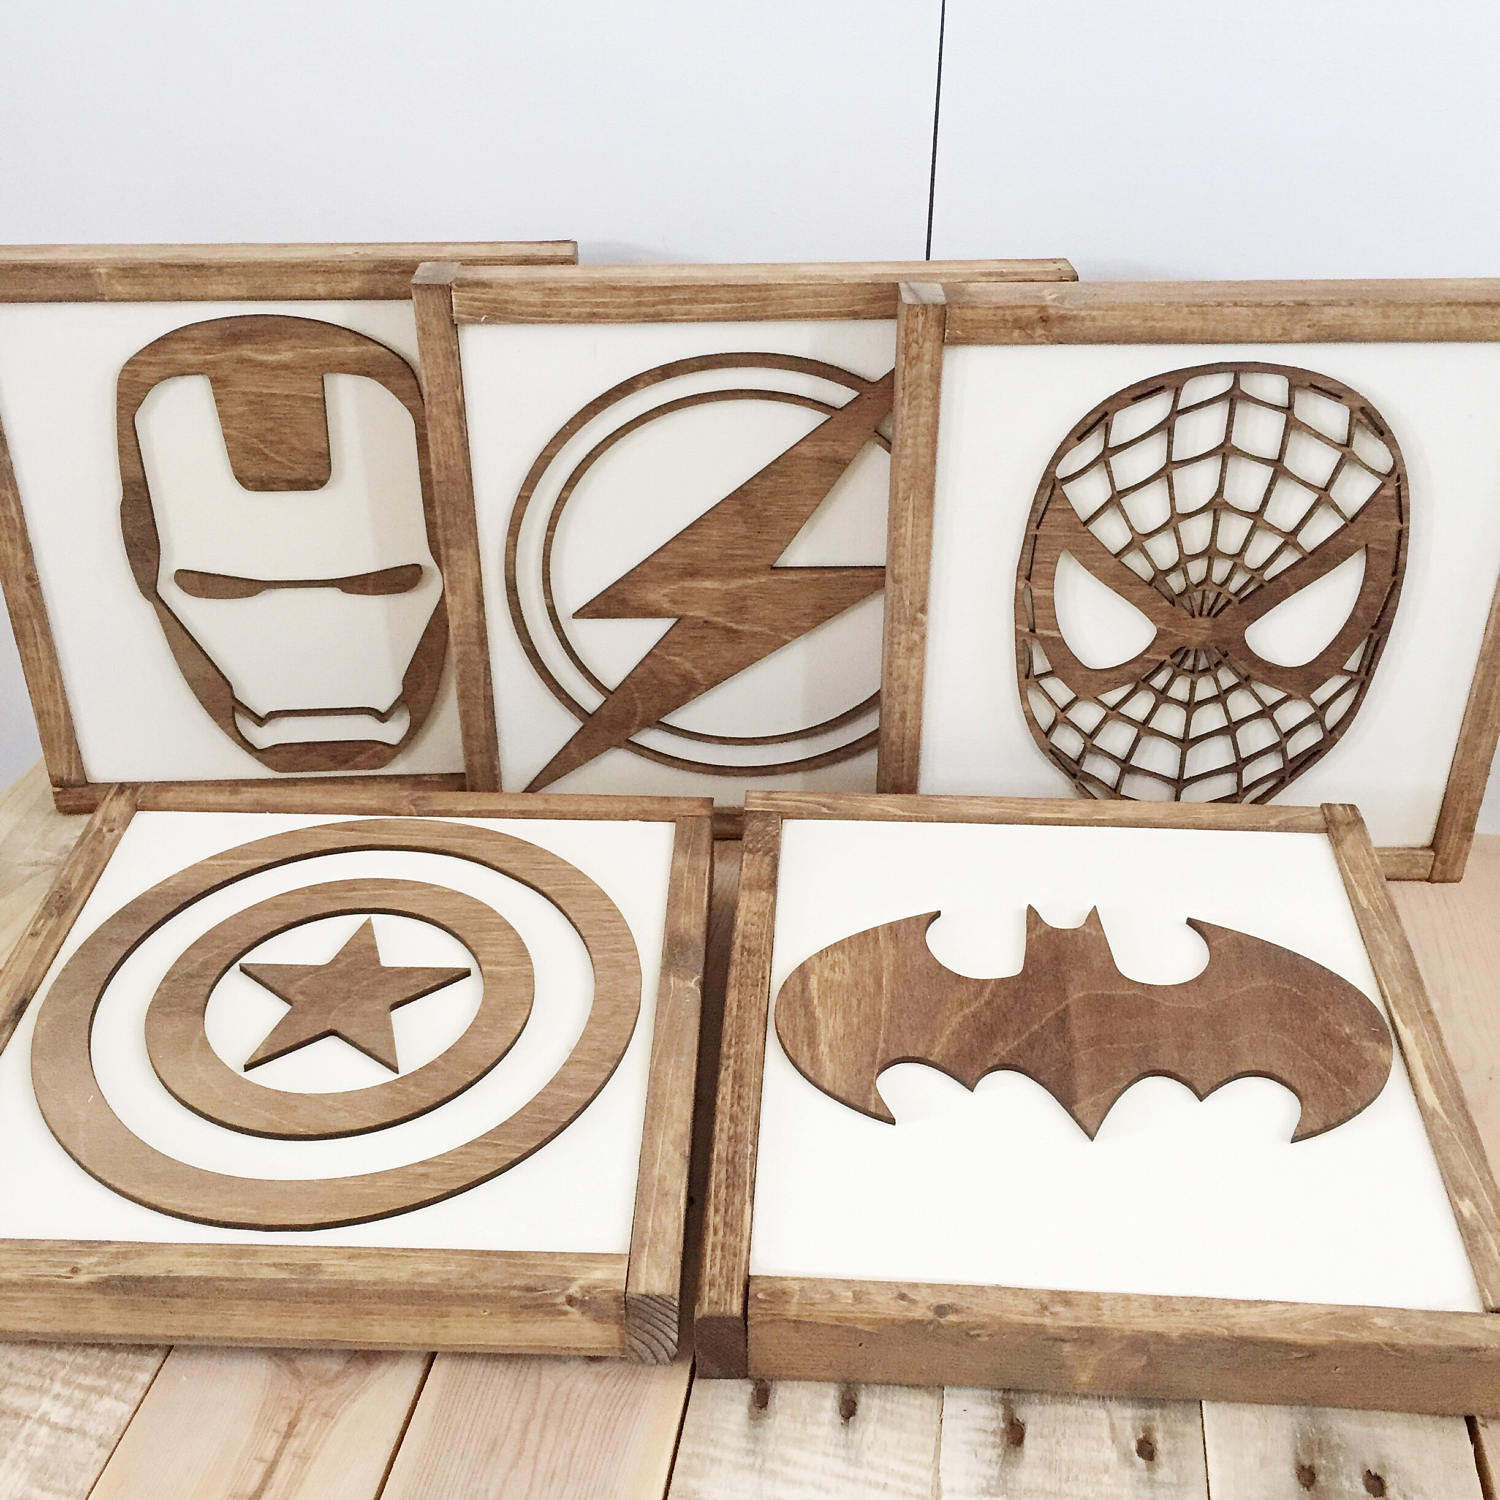 Superhero 11x11 Sign – Wood The Wall Handmade | Sign Art inch